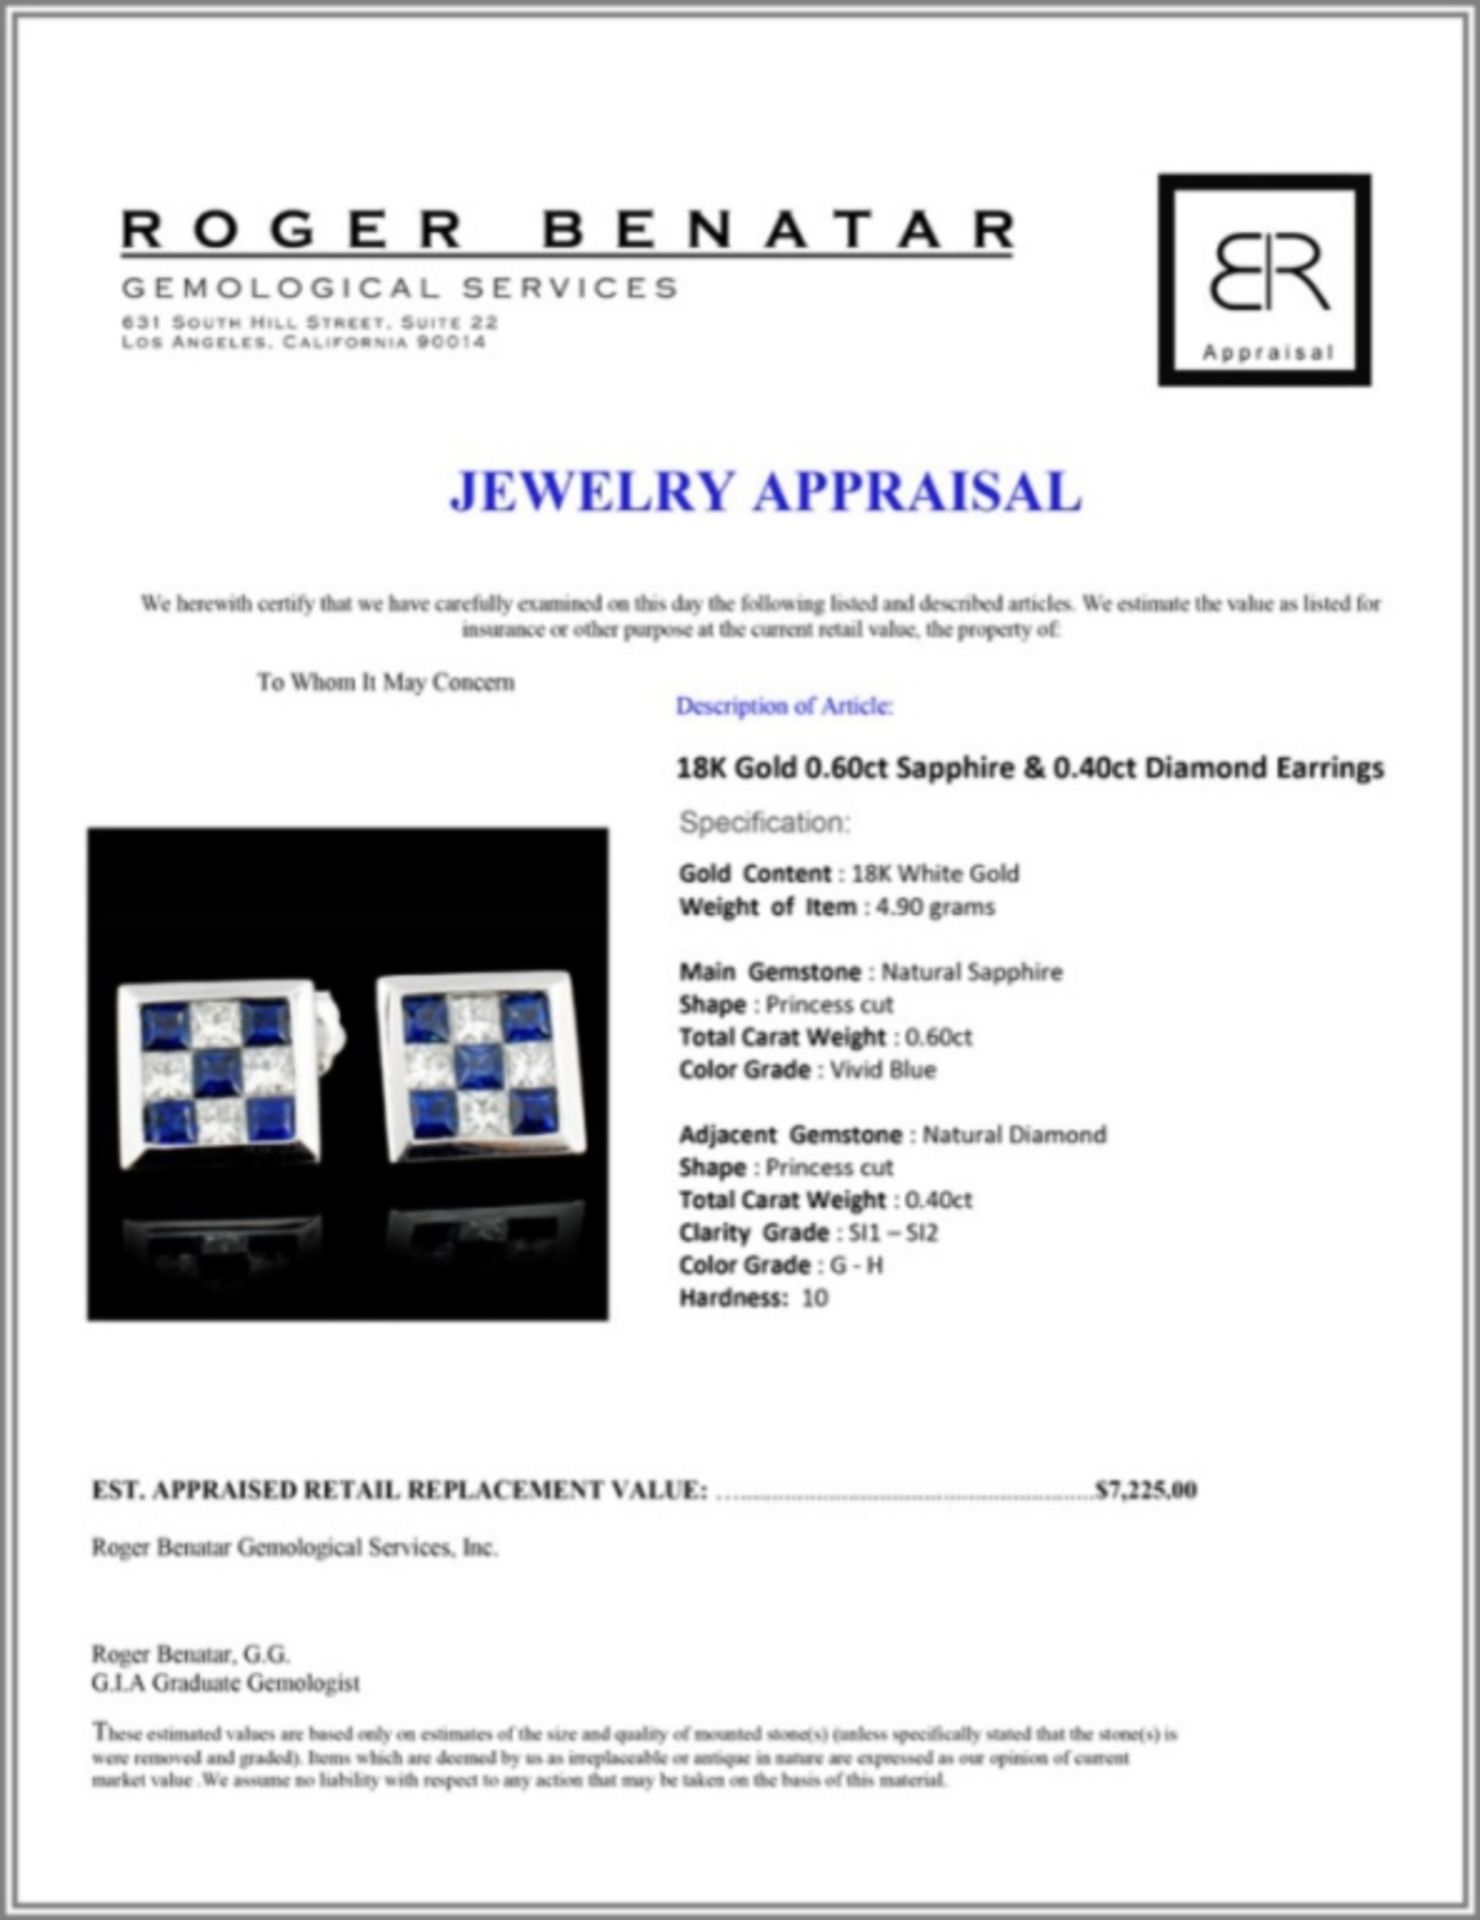 18K Gold 0.60ct Sapphire & 0.40ct Diamond Earrings - Image 3 of 3